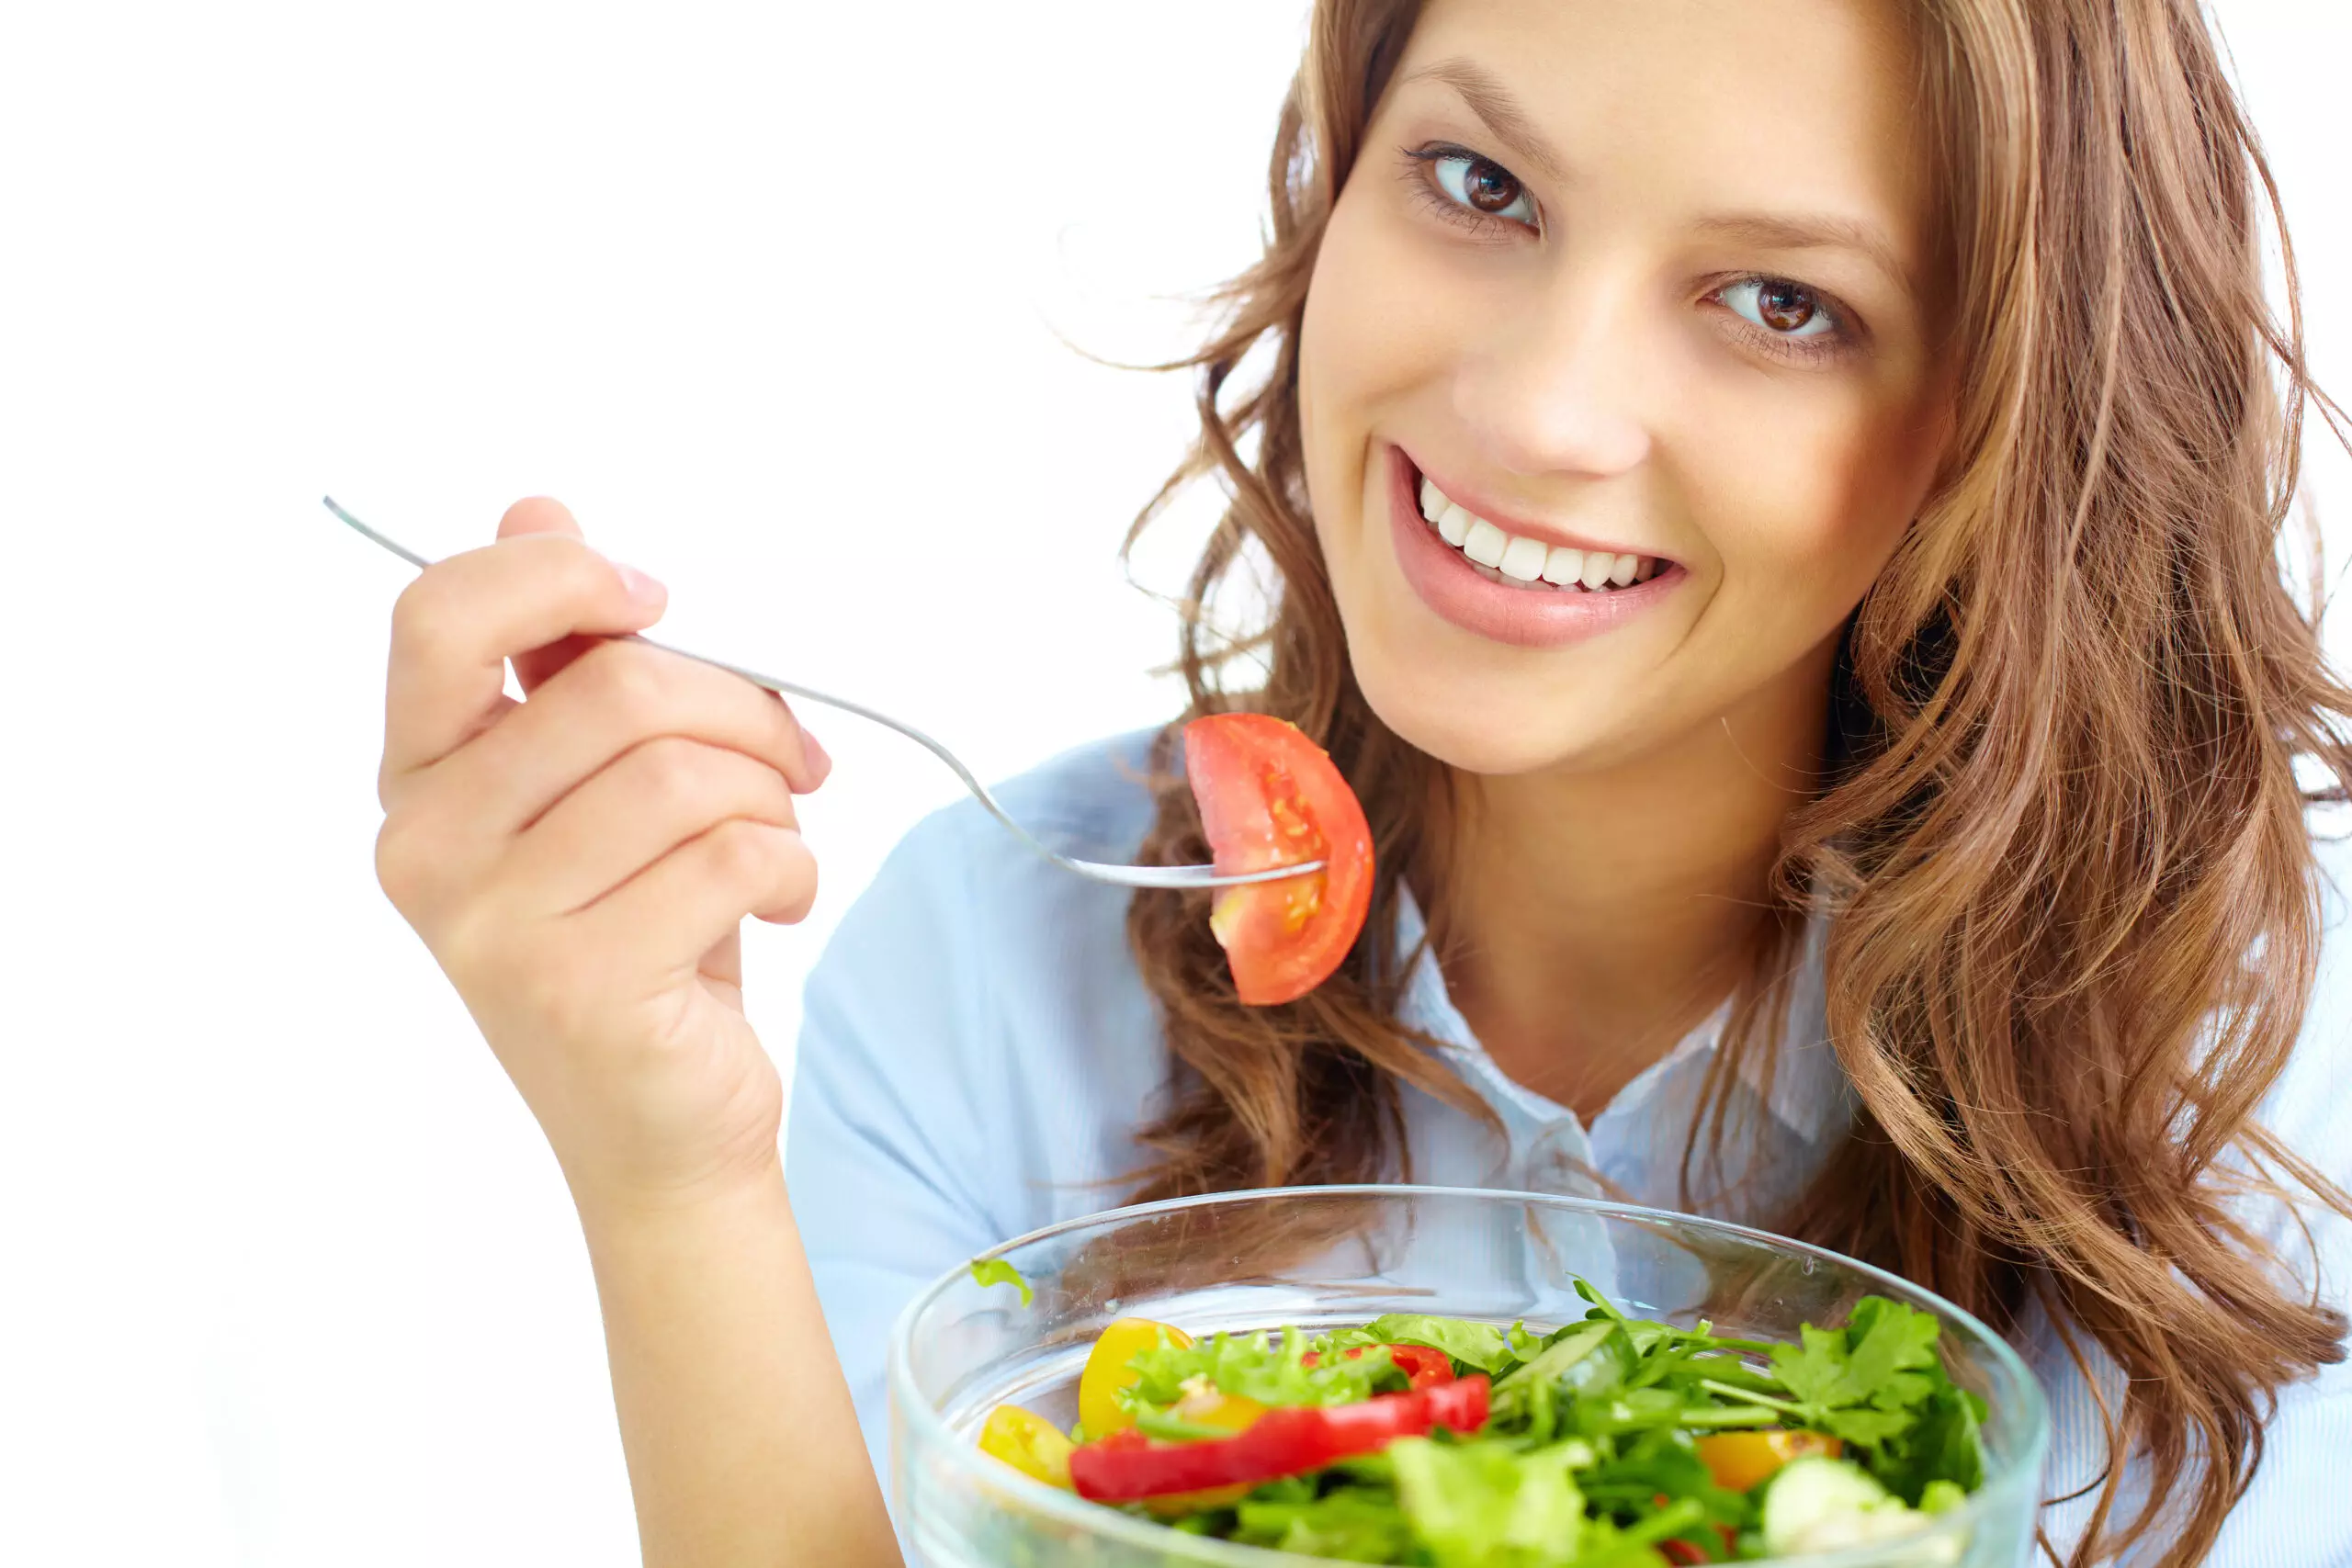 Woman smiling eating fresh salad with tomato.